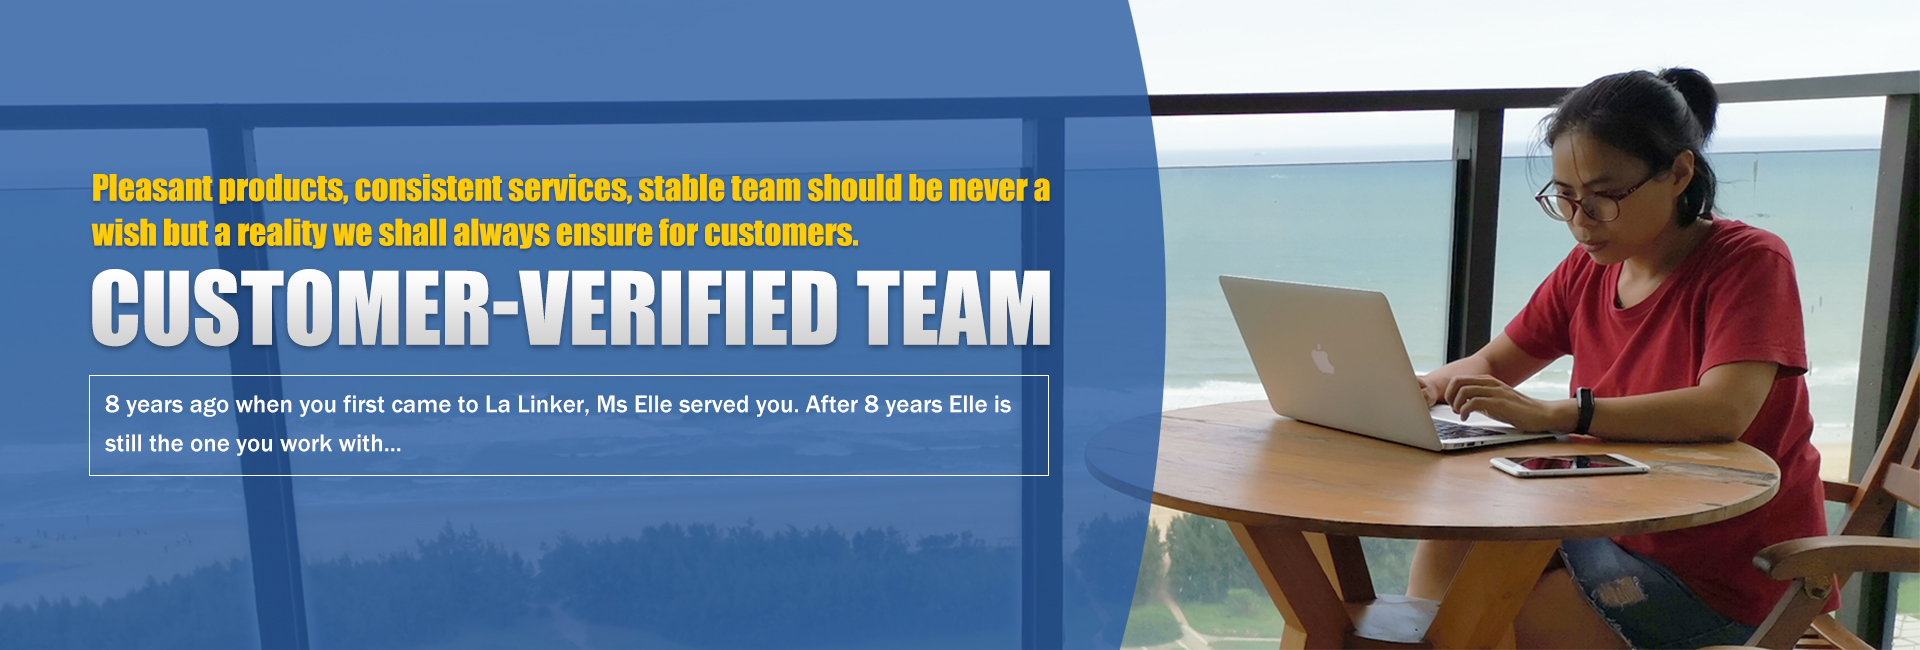 Customer-verified Team Banner 0302